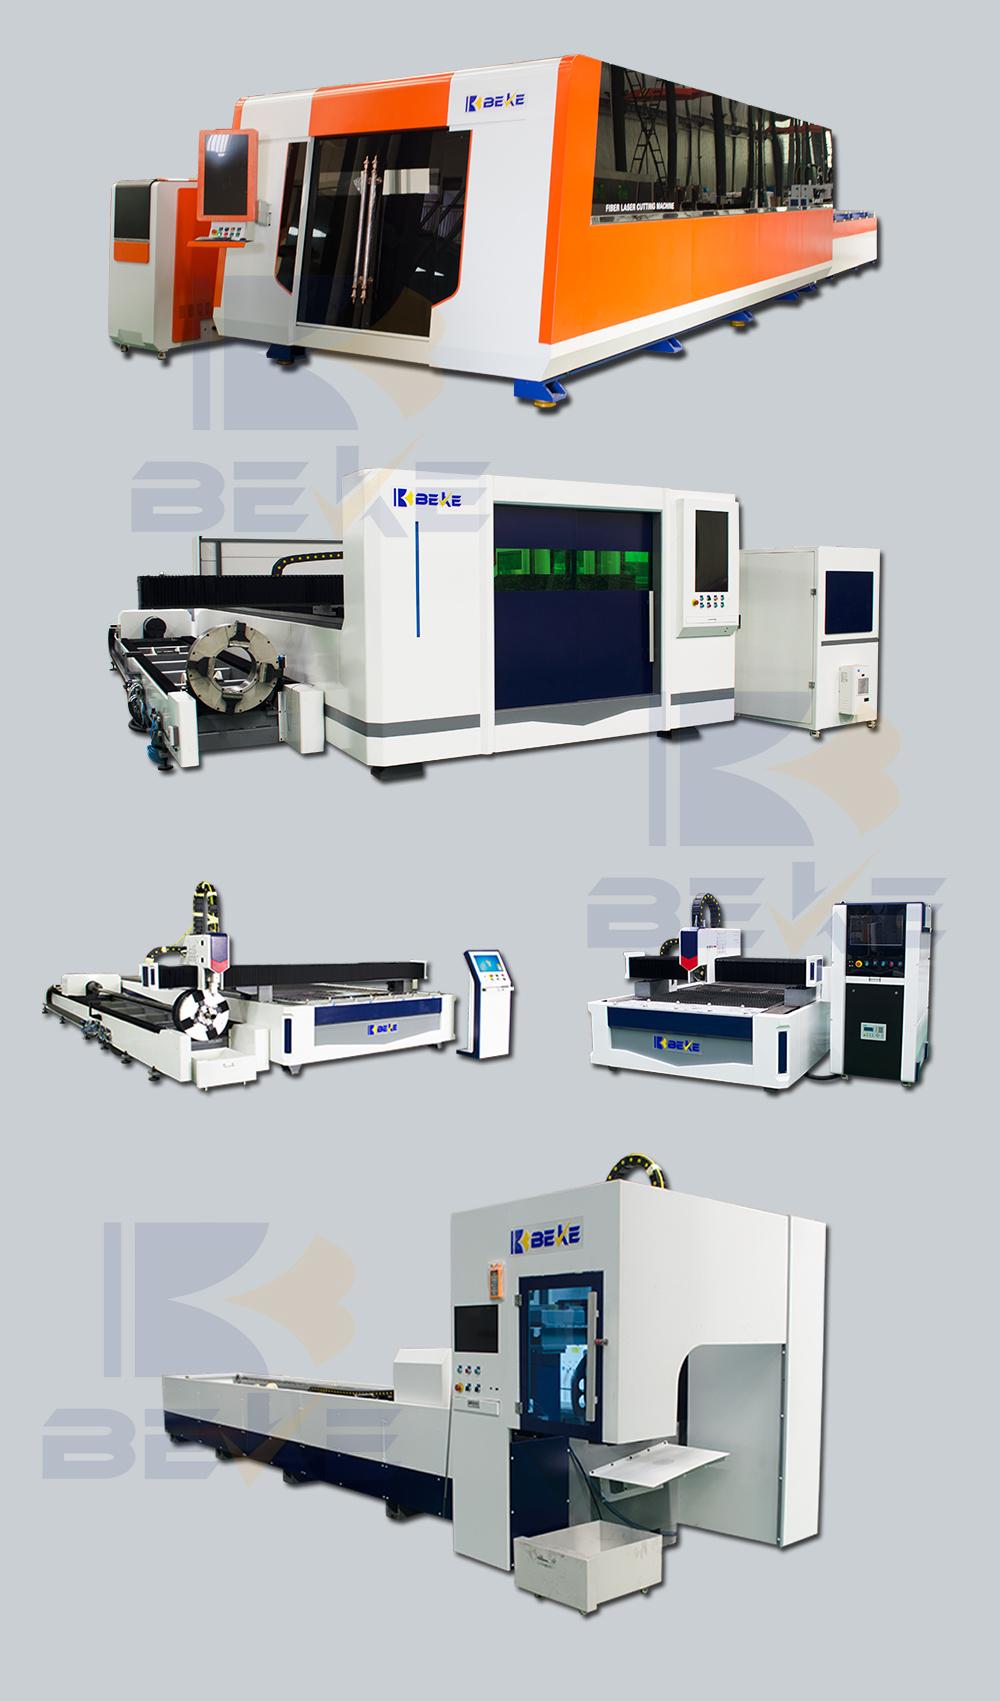 Beke Brand High Performance 1500W Rectangular Pipe CNC Laser Cutting Machine